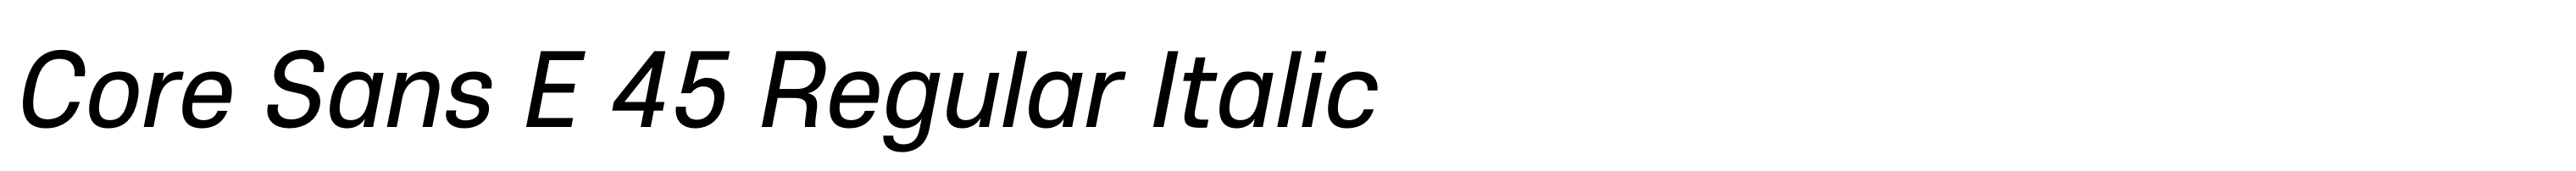 Core Sans E 45 Regular Italic